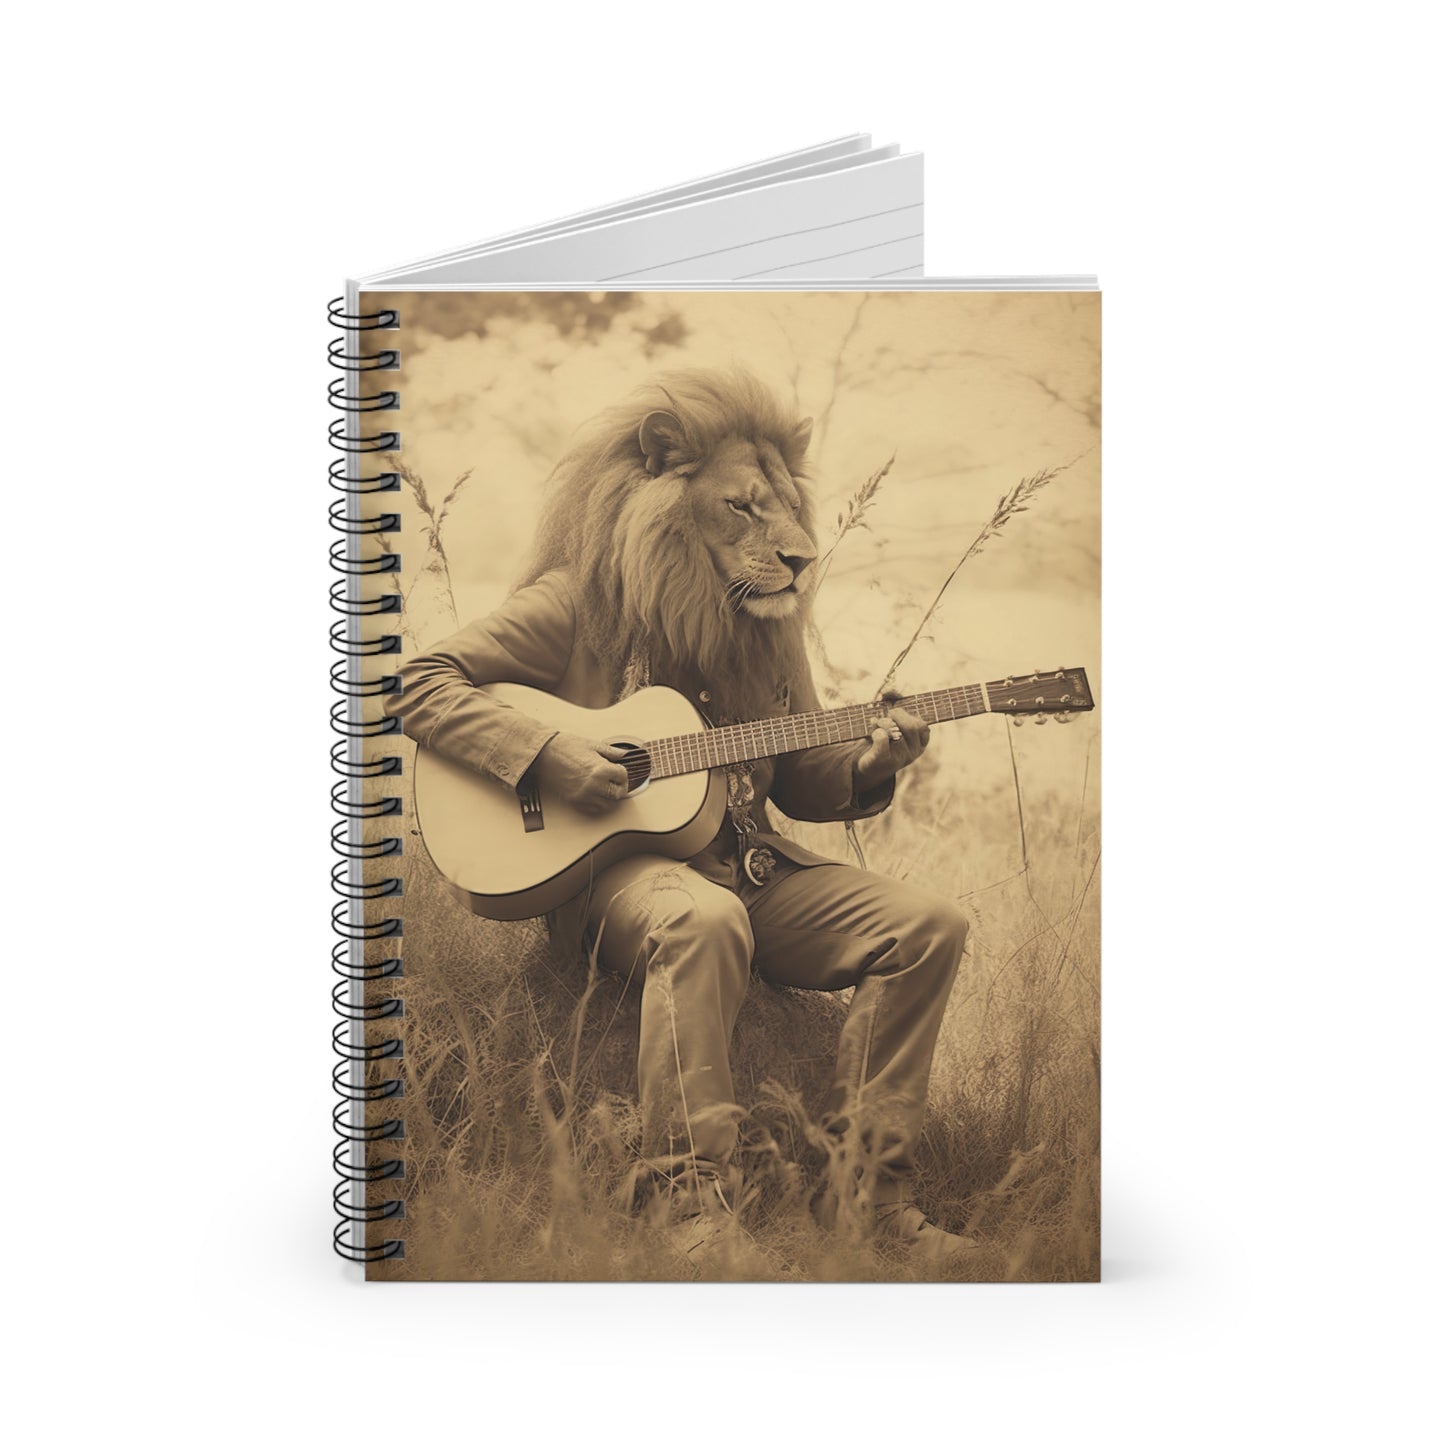 Lion Guitar | Spiral Notebook - Ruled Line